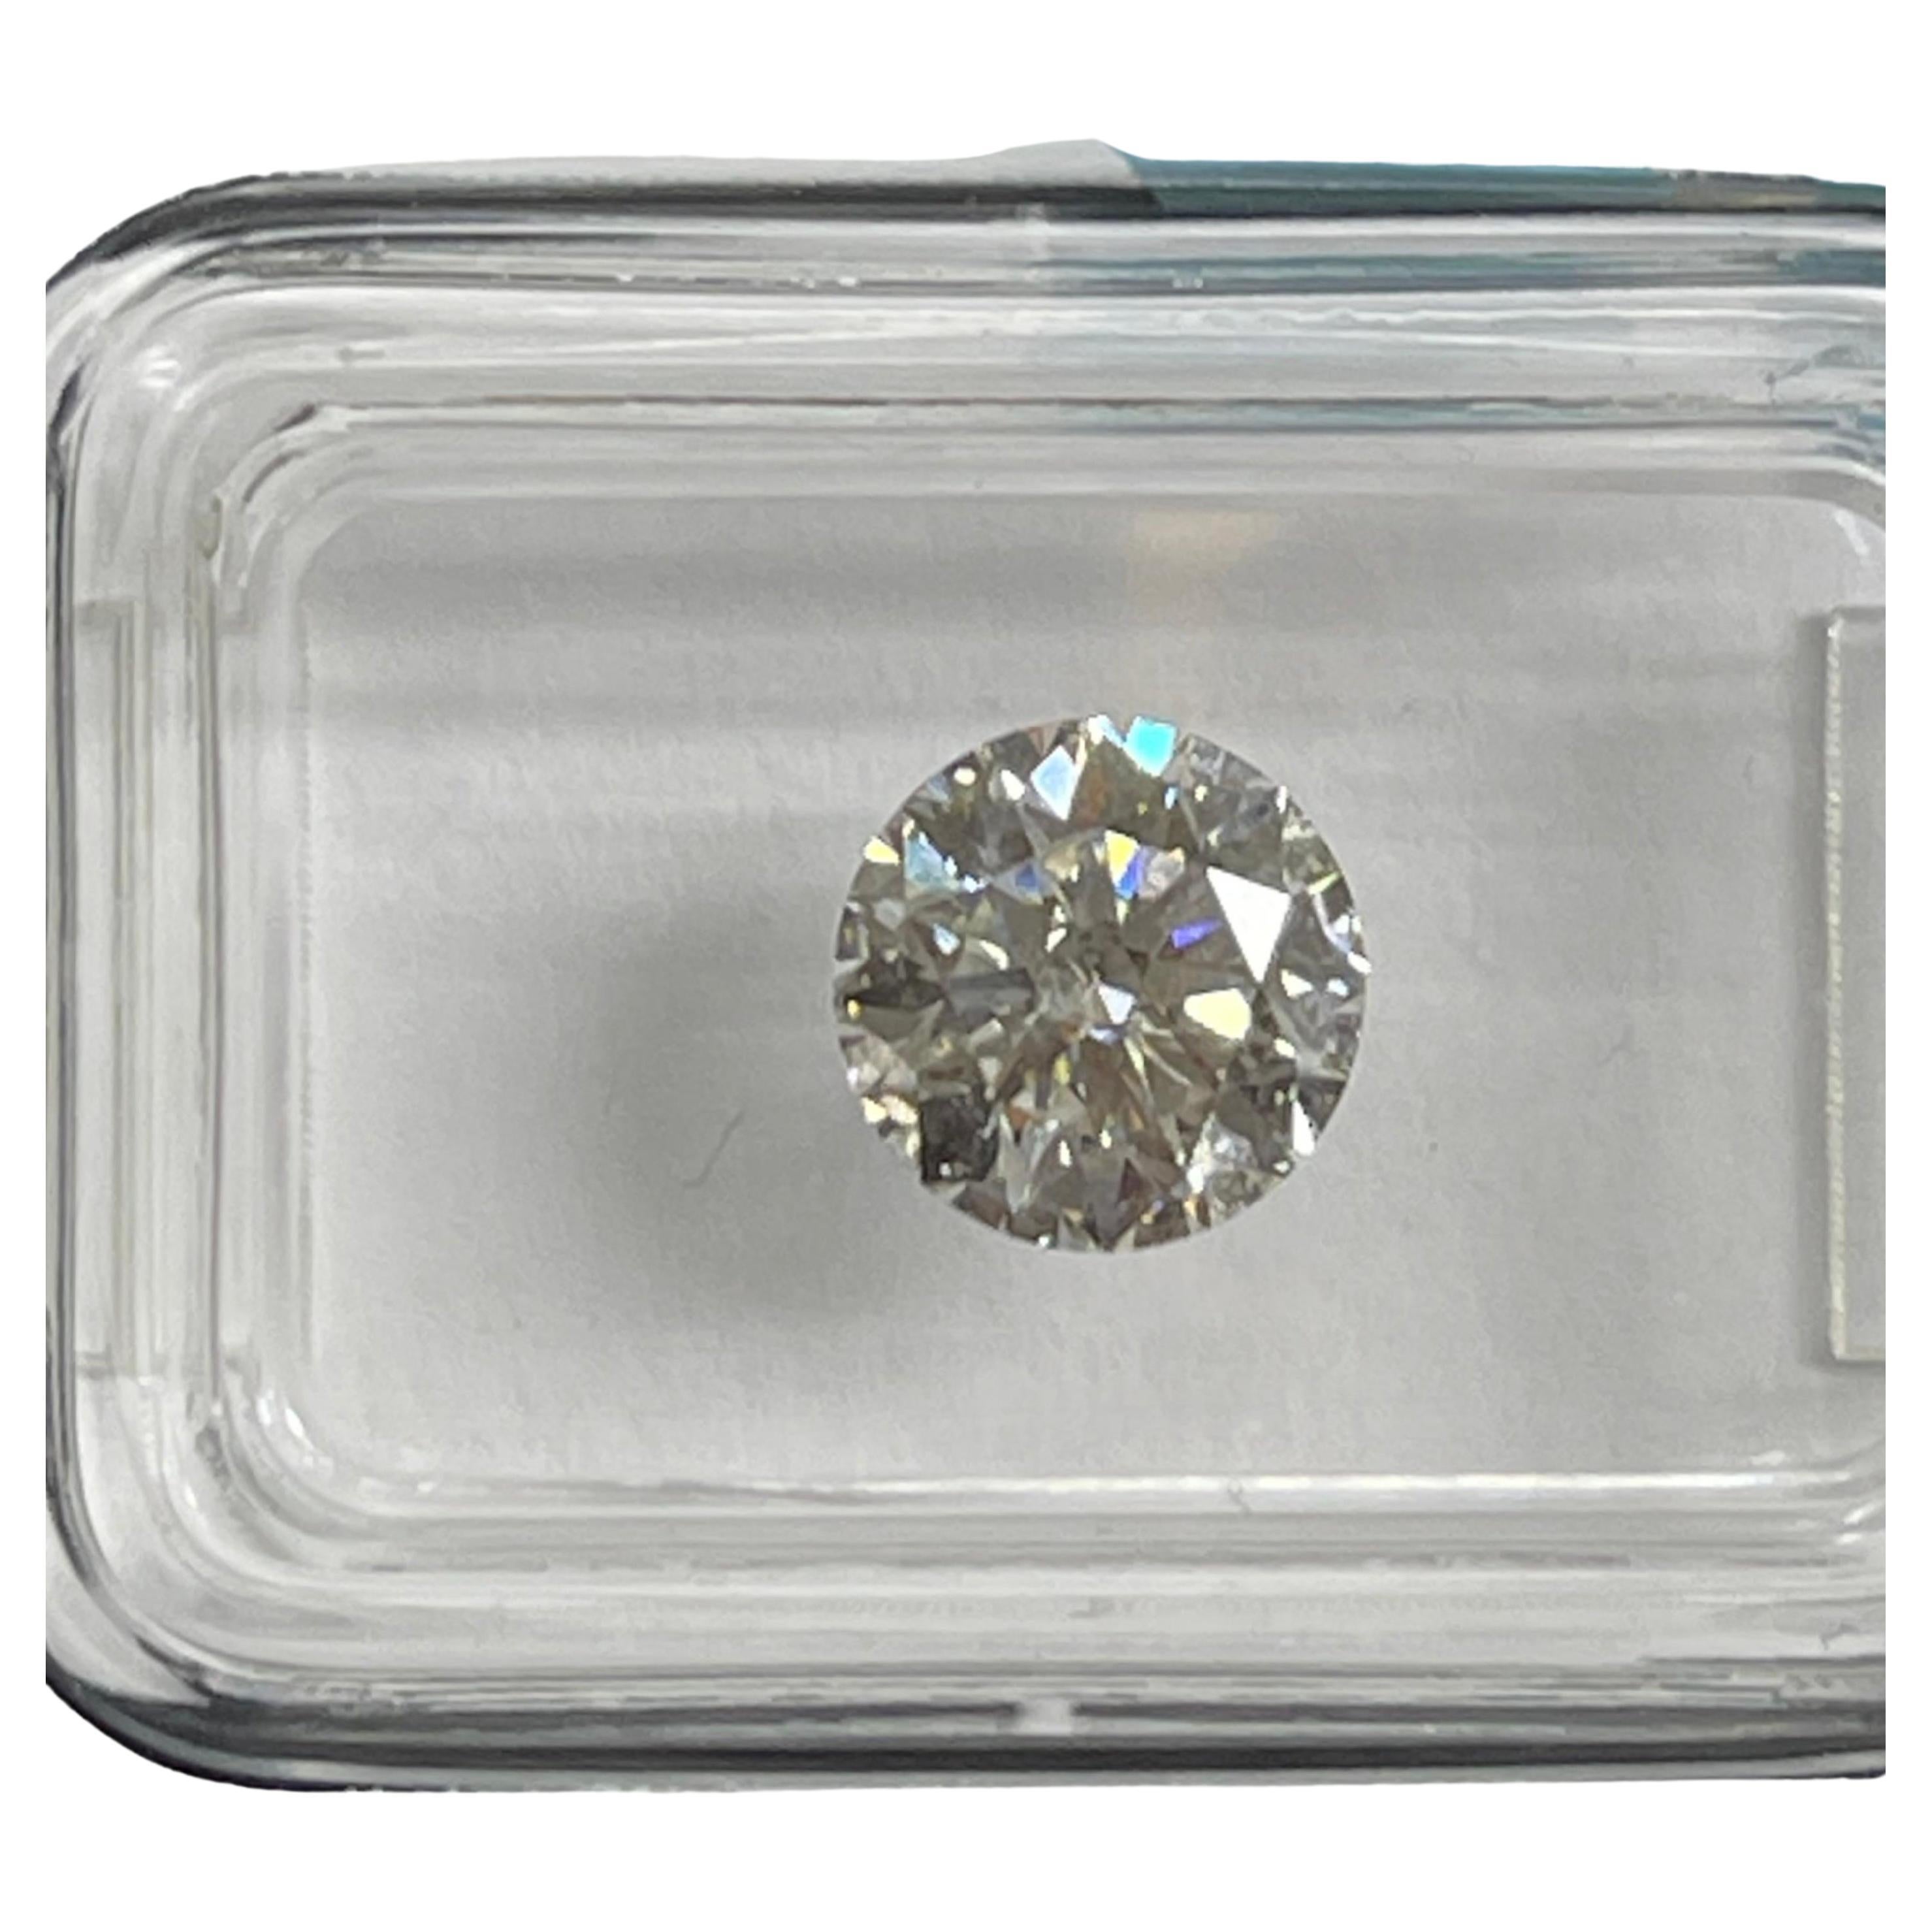 Natural Diamond graded by IGI.

Shape: Round Brilliant
Weight: 1.30CT
Color: I
Clarity: VVS 2
Cut: Excellent
Polish: Excellent
Symmetry: Excellent
Fluorescence: None
Inscription IGI: 630434223